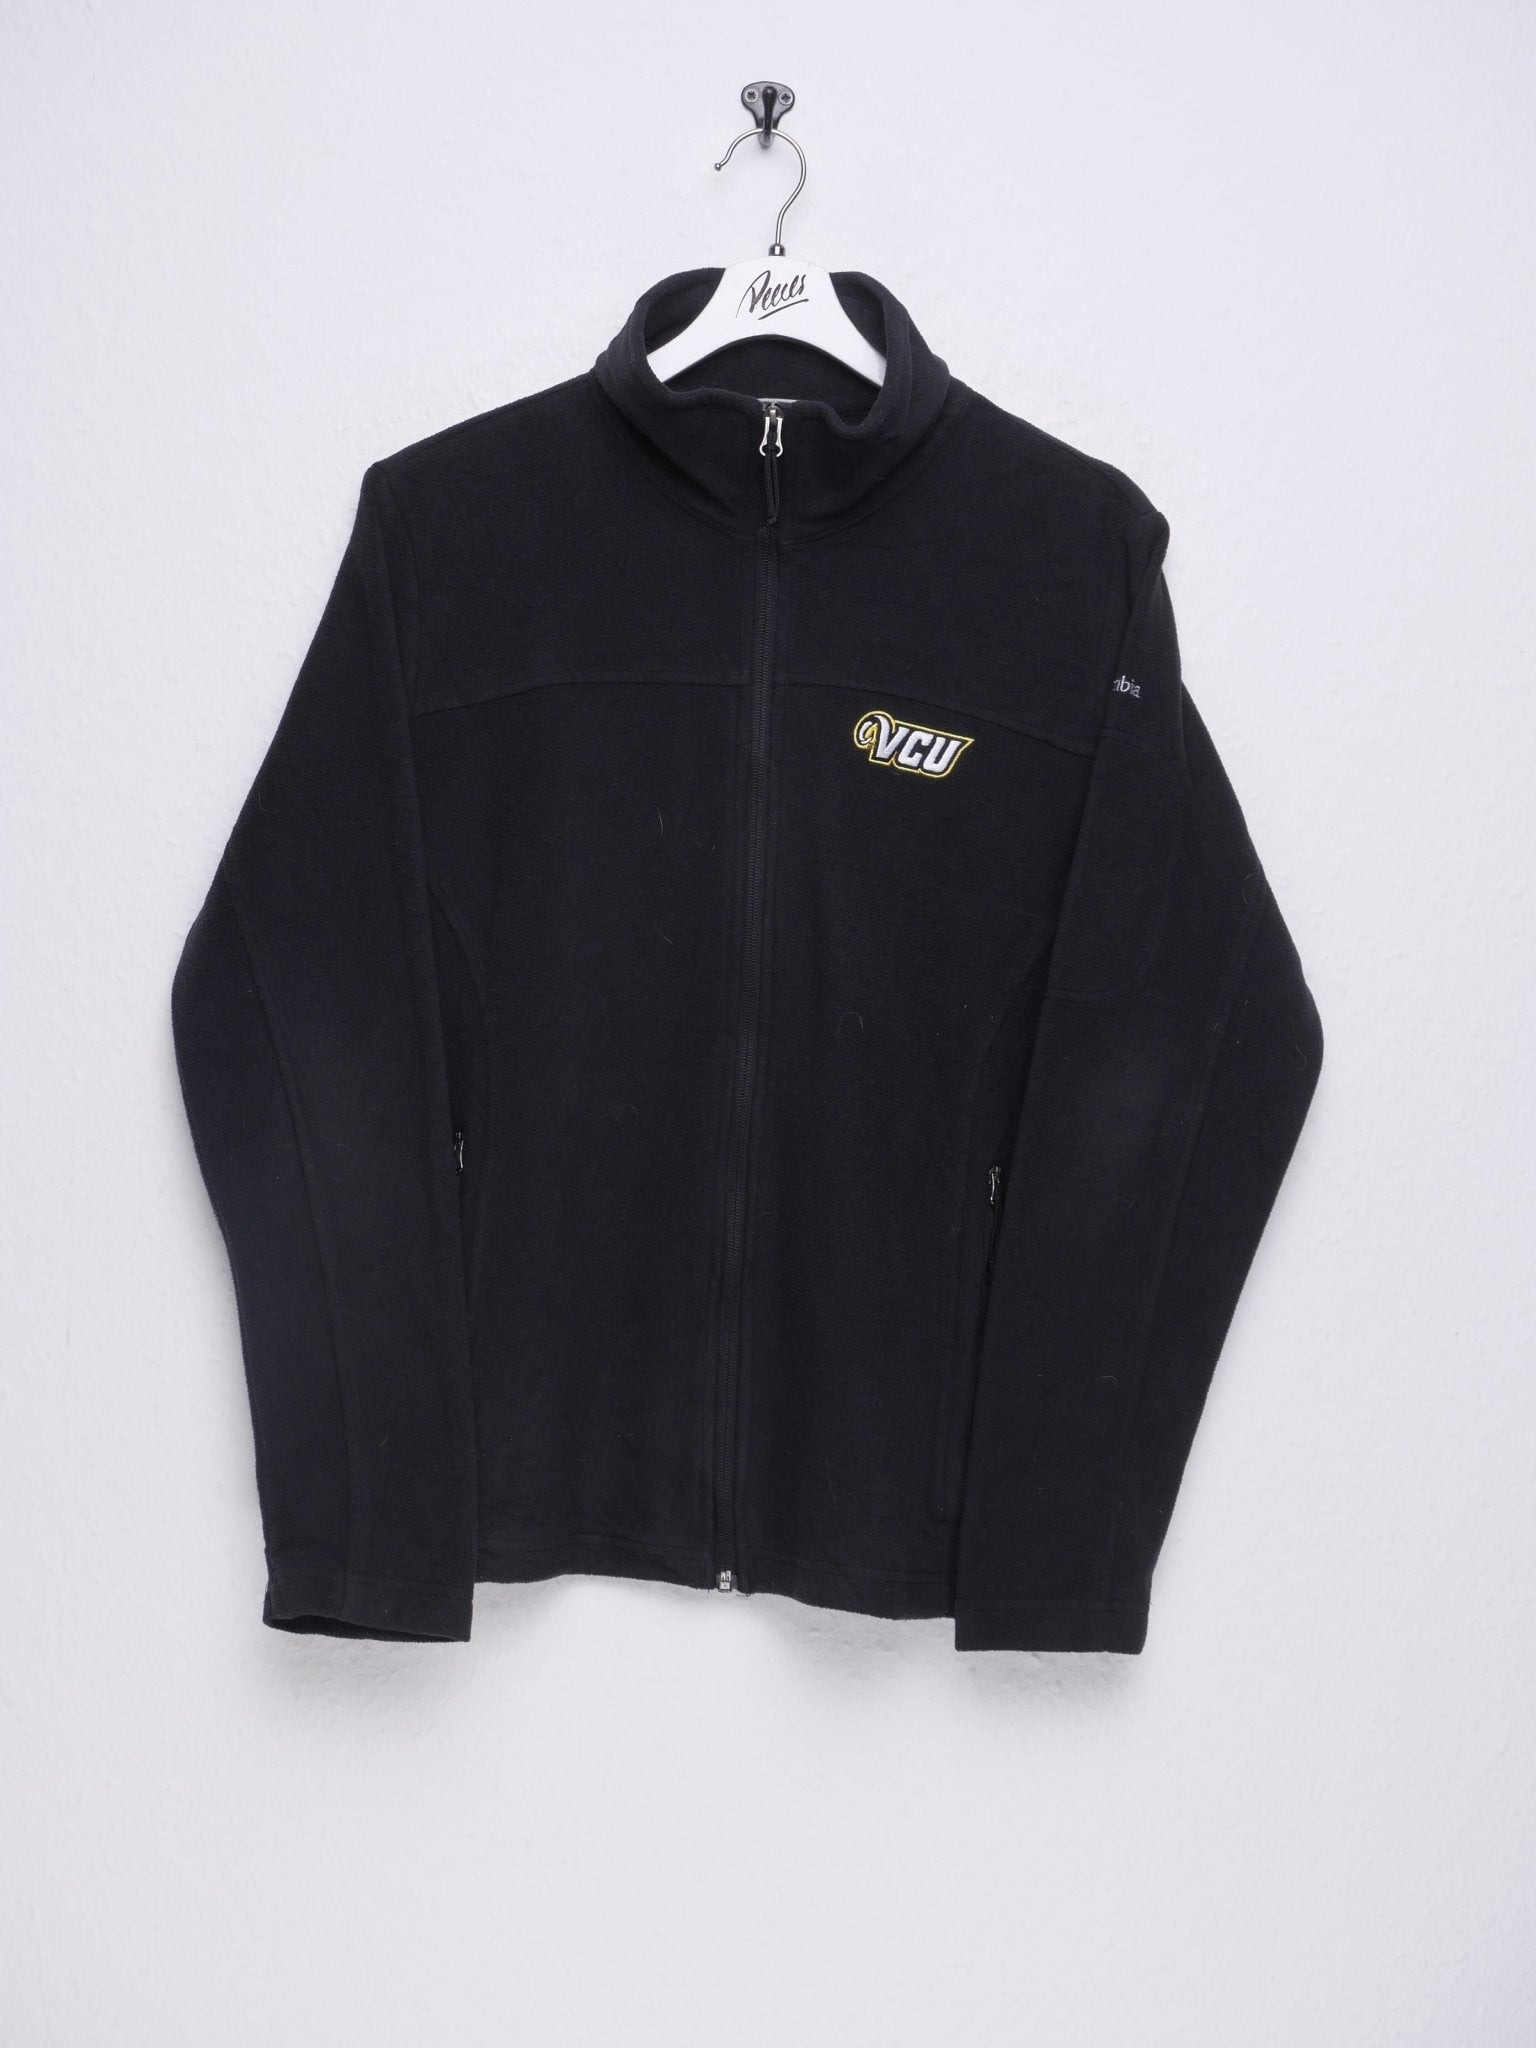 Columbia embroidered Logo 'VCU' black Full Zip Fleece Sweater - Peeces